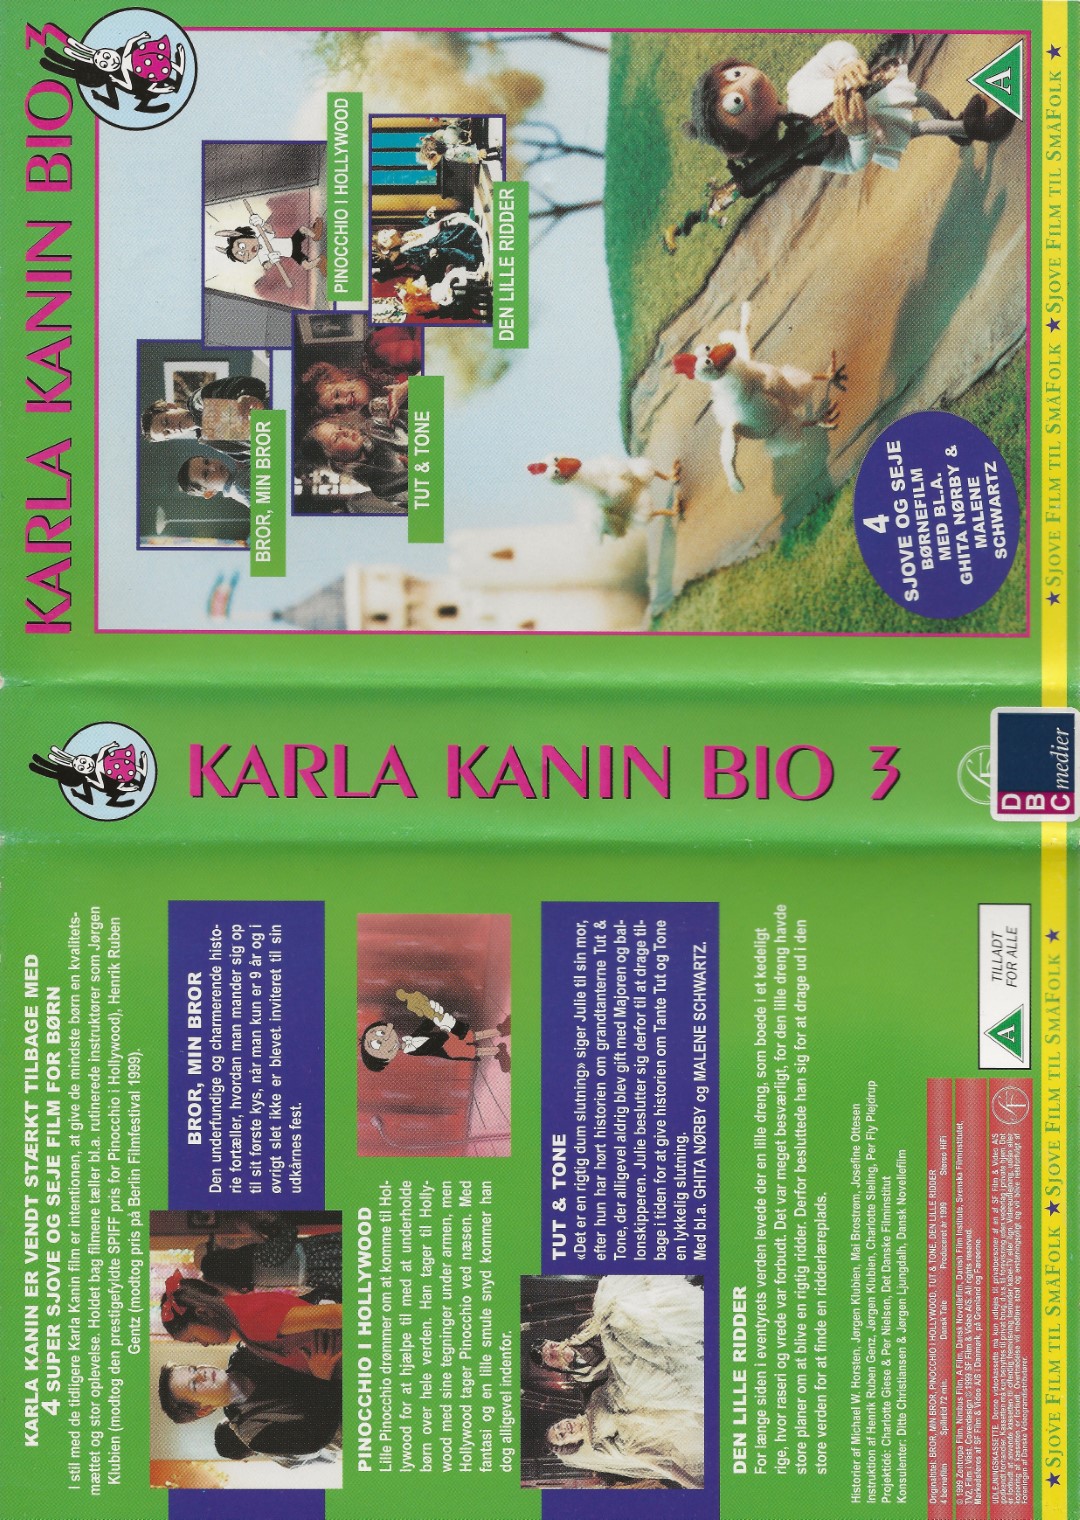 Karla Kanin Bio 3  VHS SF Film A/S 1999